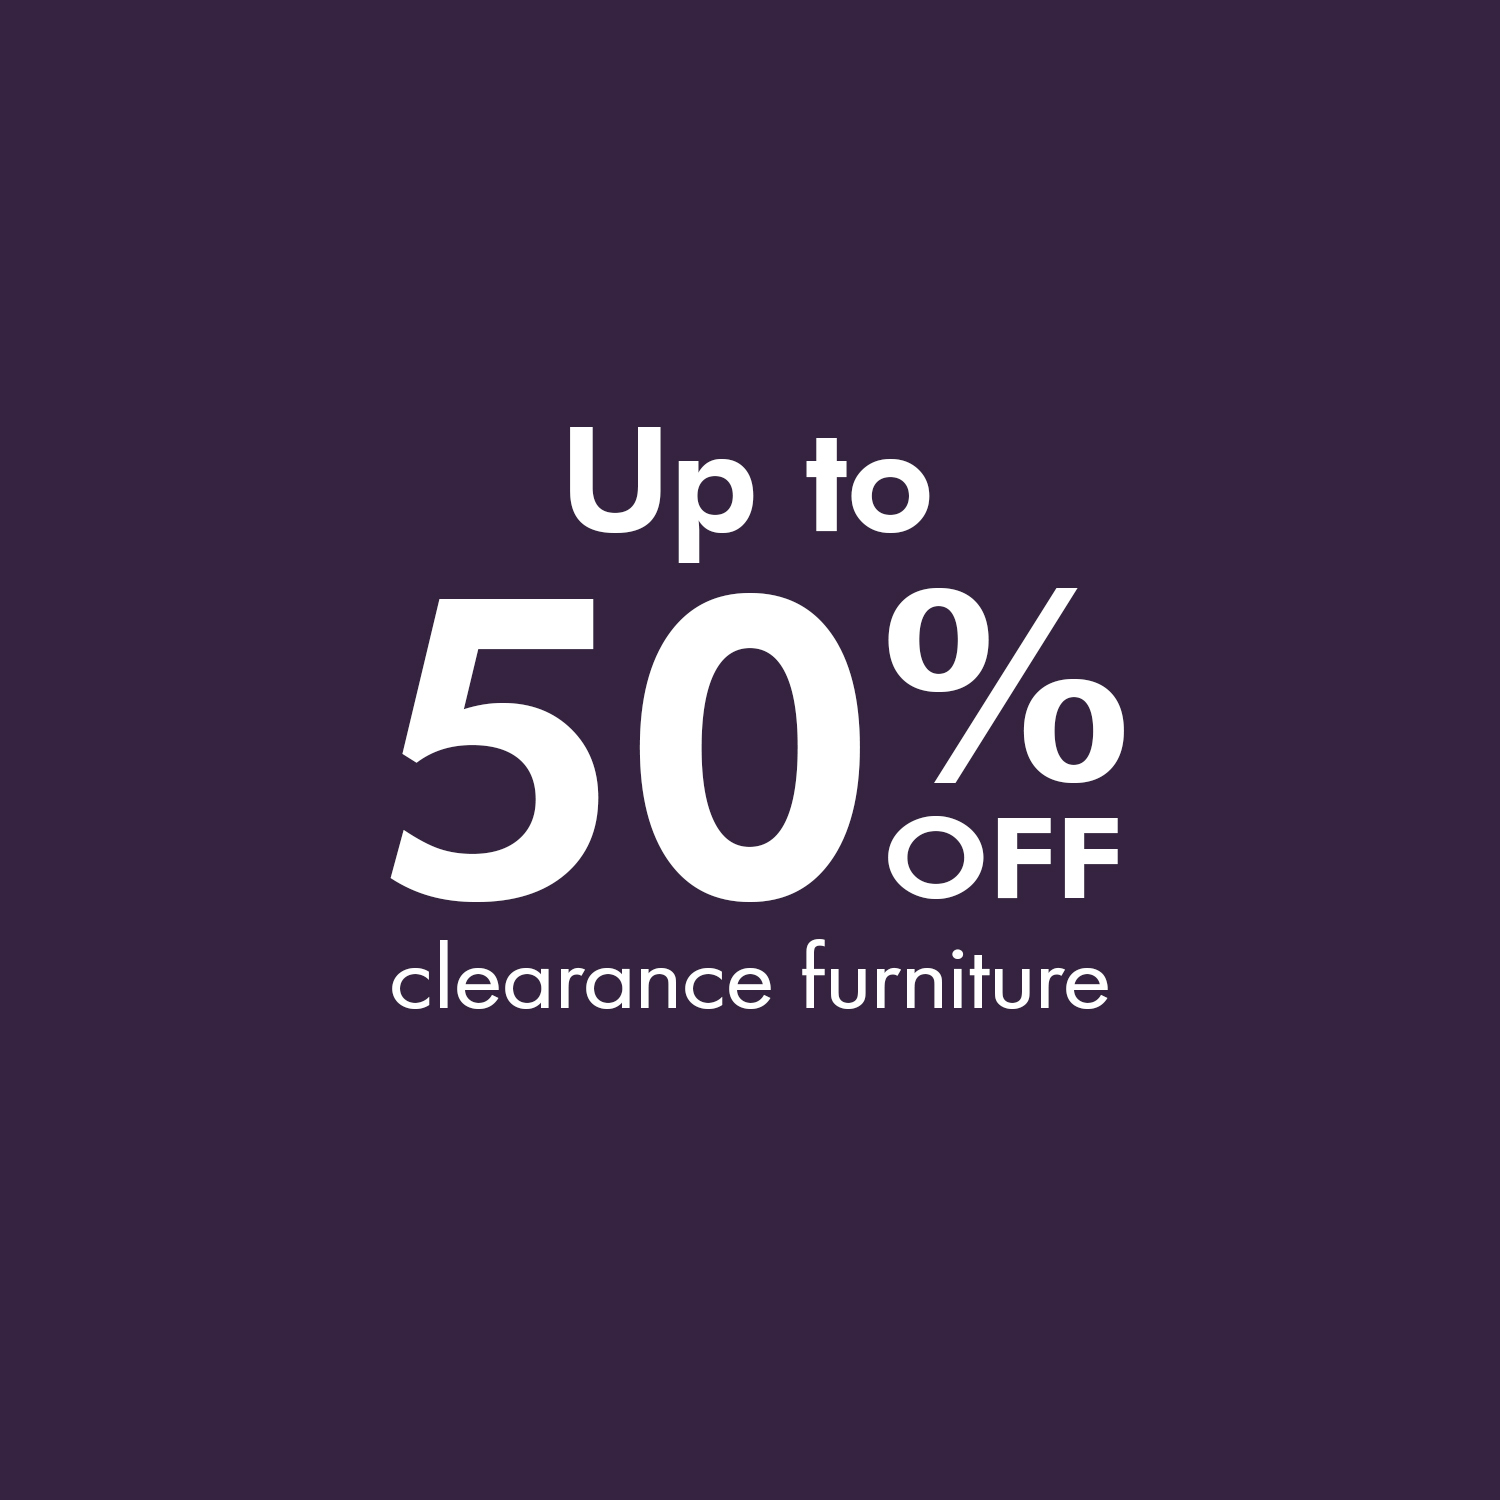 Clearance furniture